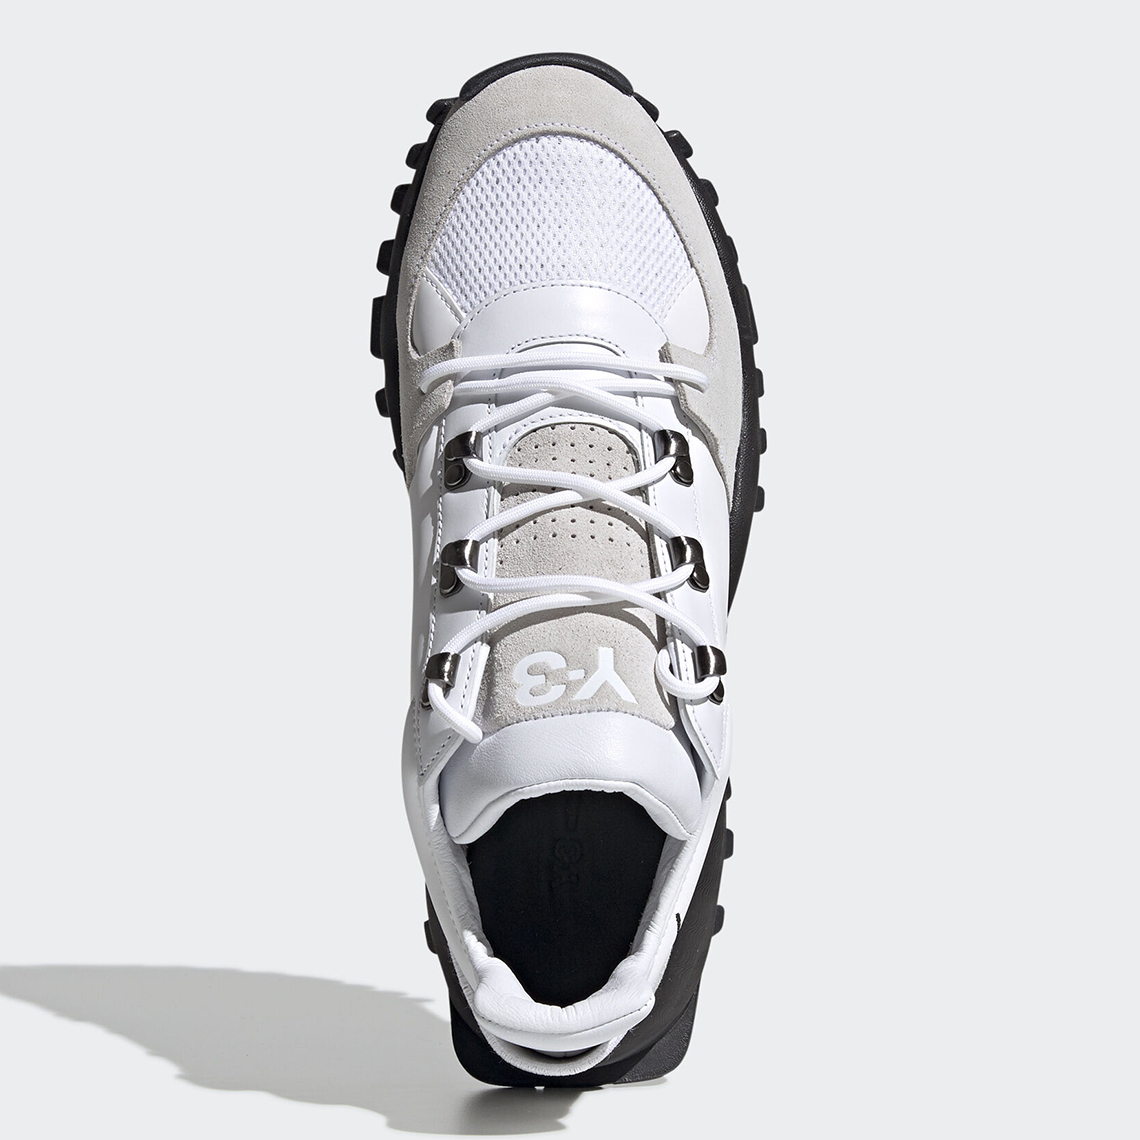 adidas Y-3 Kyoi Trail EF2640 EF2641 Release Info | SneakerNews.com